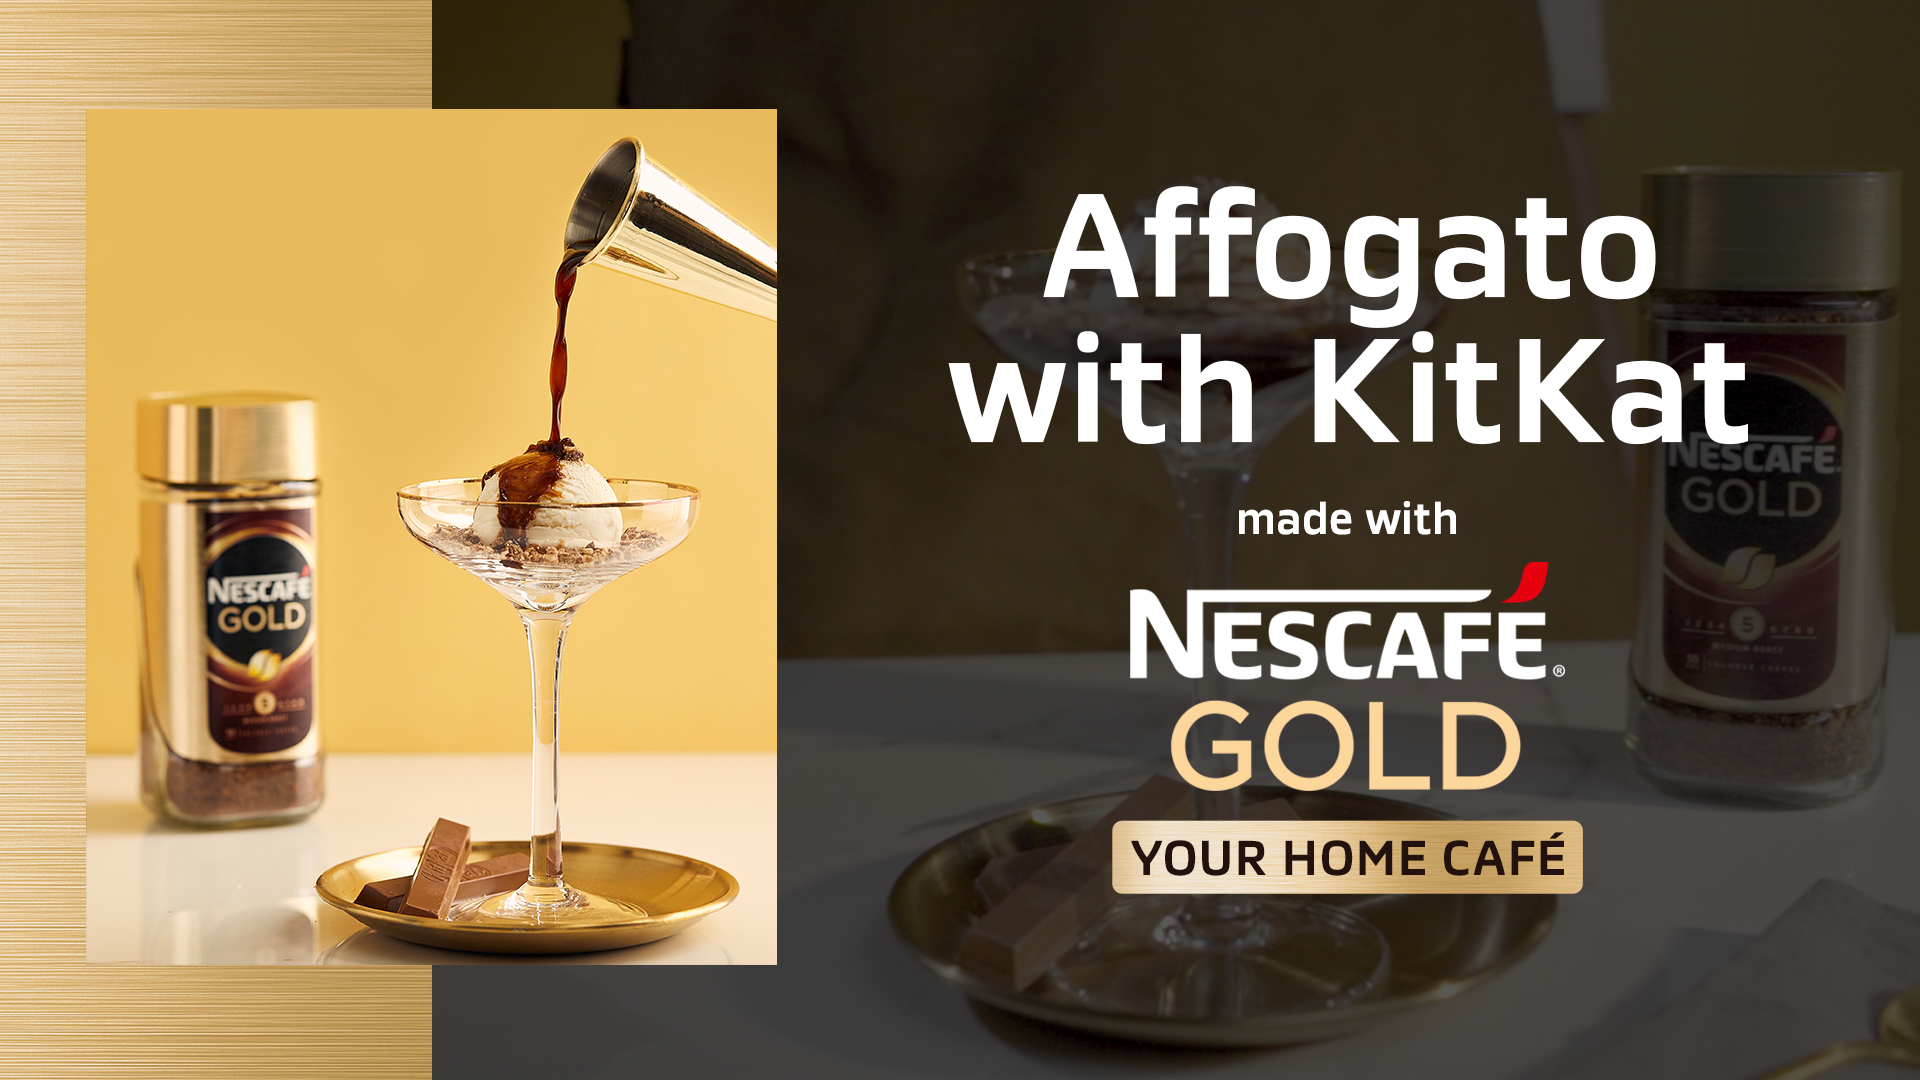 Affogato with KitKat recipe